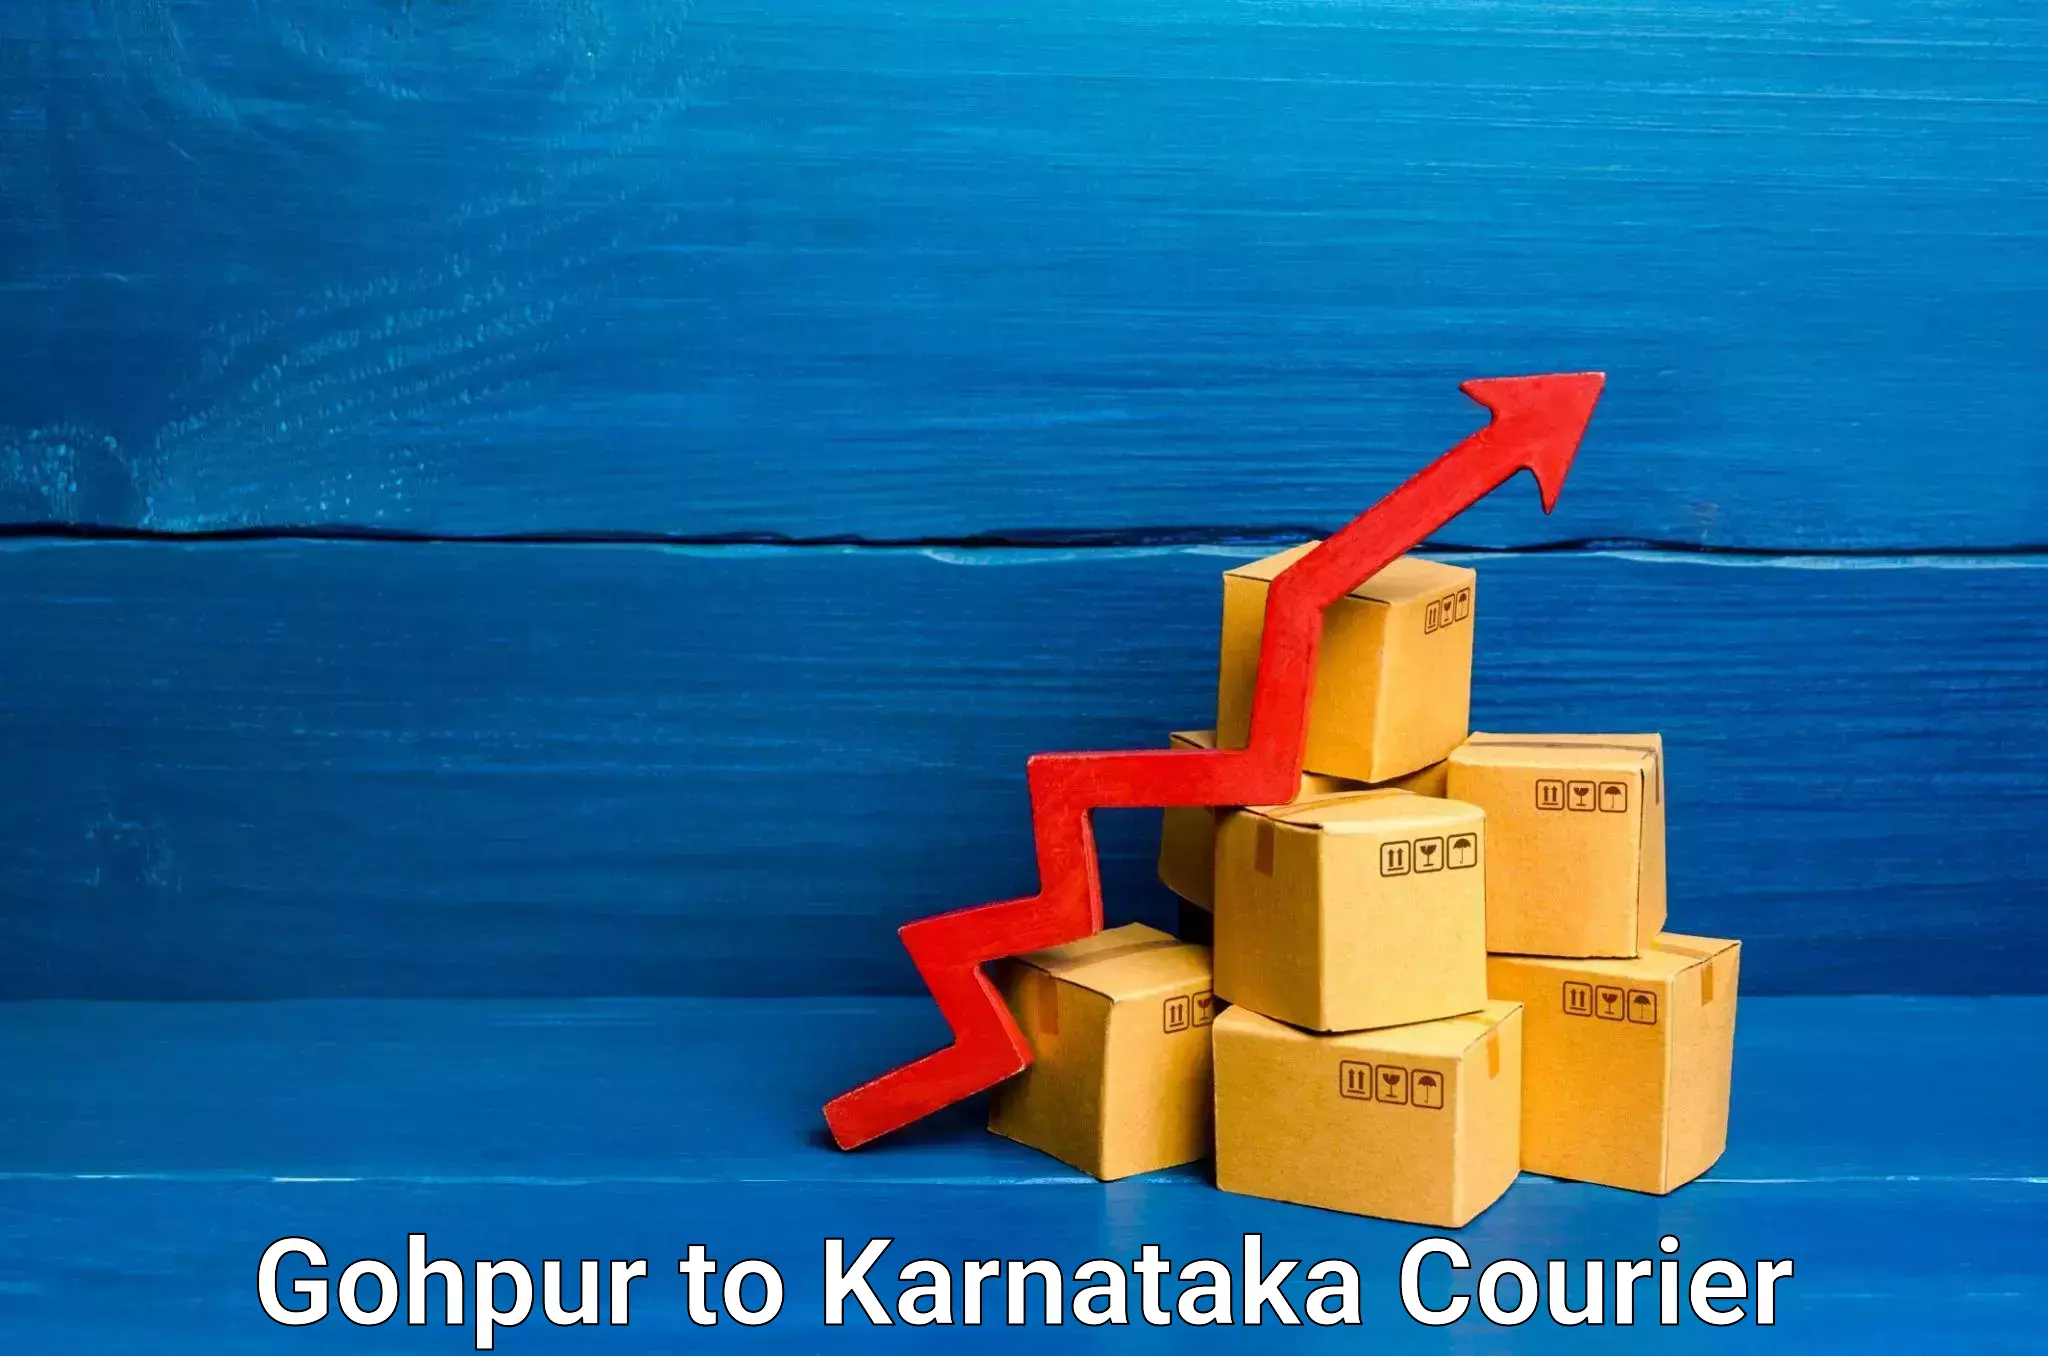 Courier service partnerships in Gohpur to Karnataka